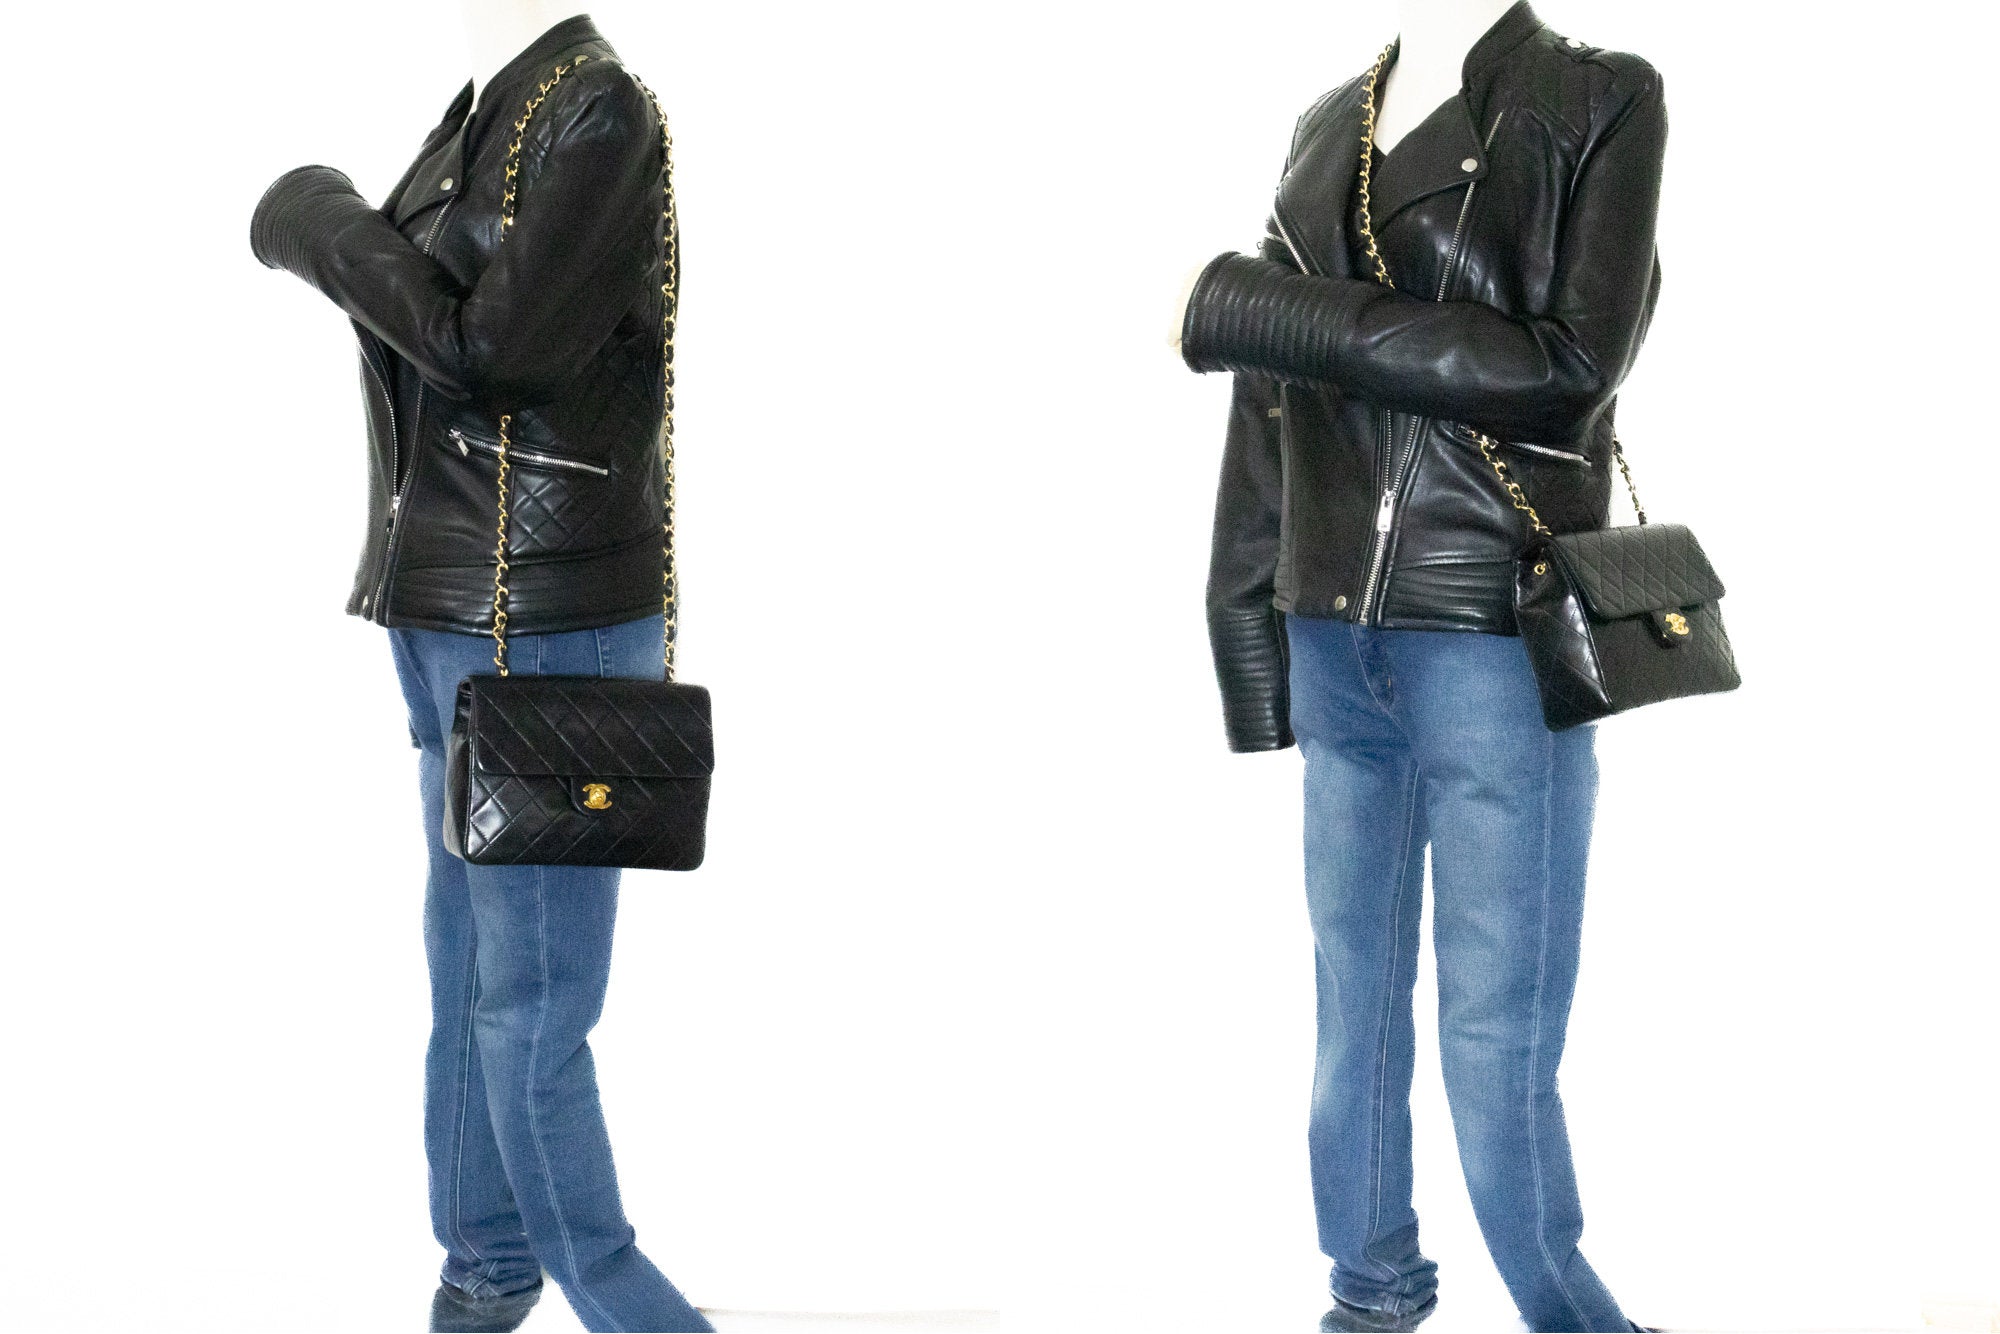 Chanel Mini Square Small Chain Shoulder Bag Crossbody Black Quilt G90